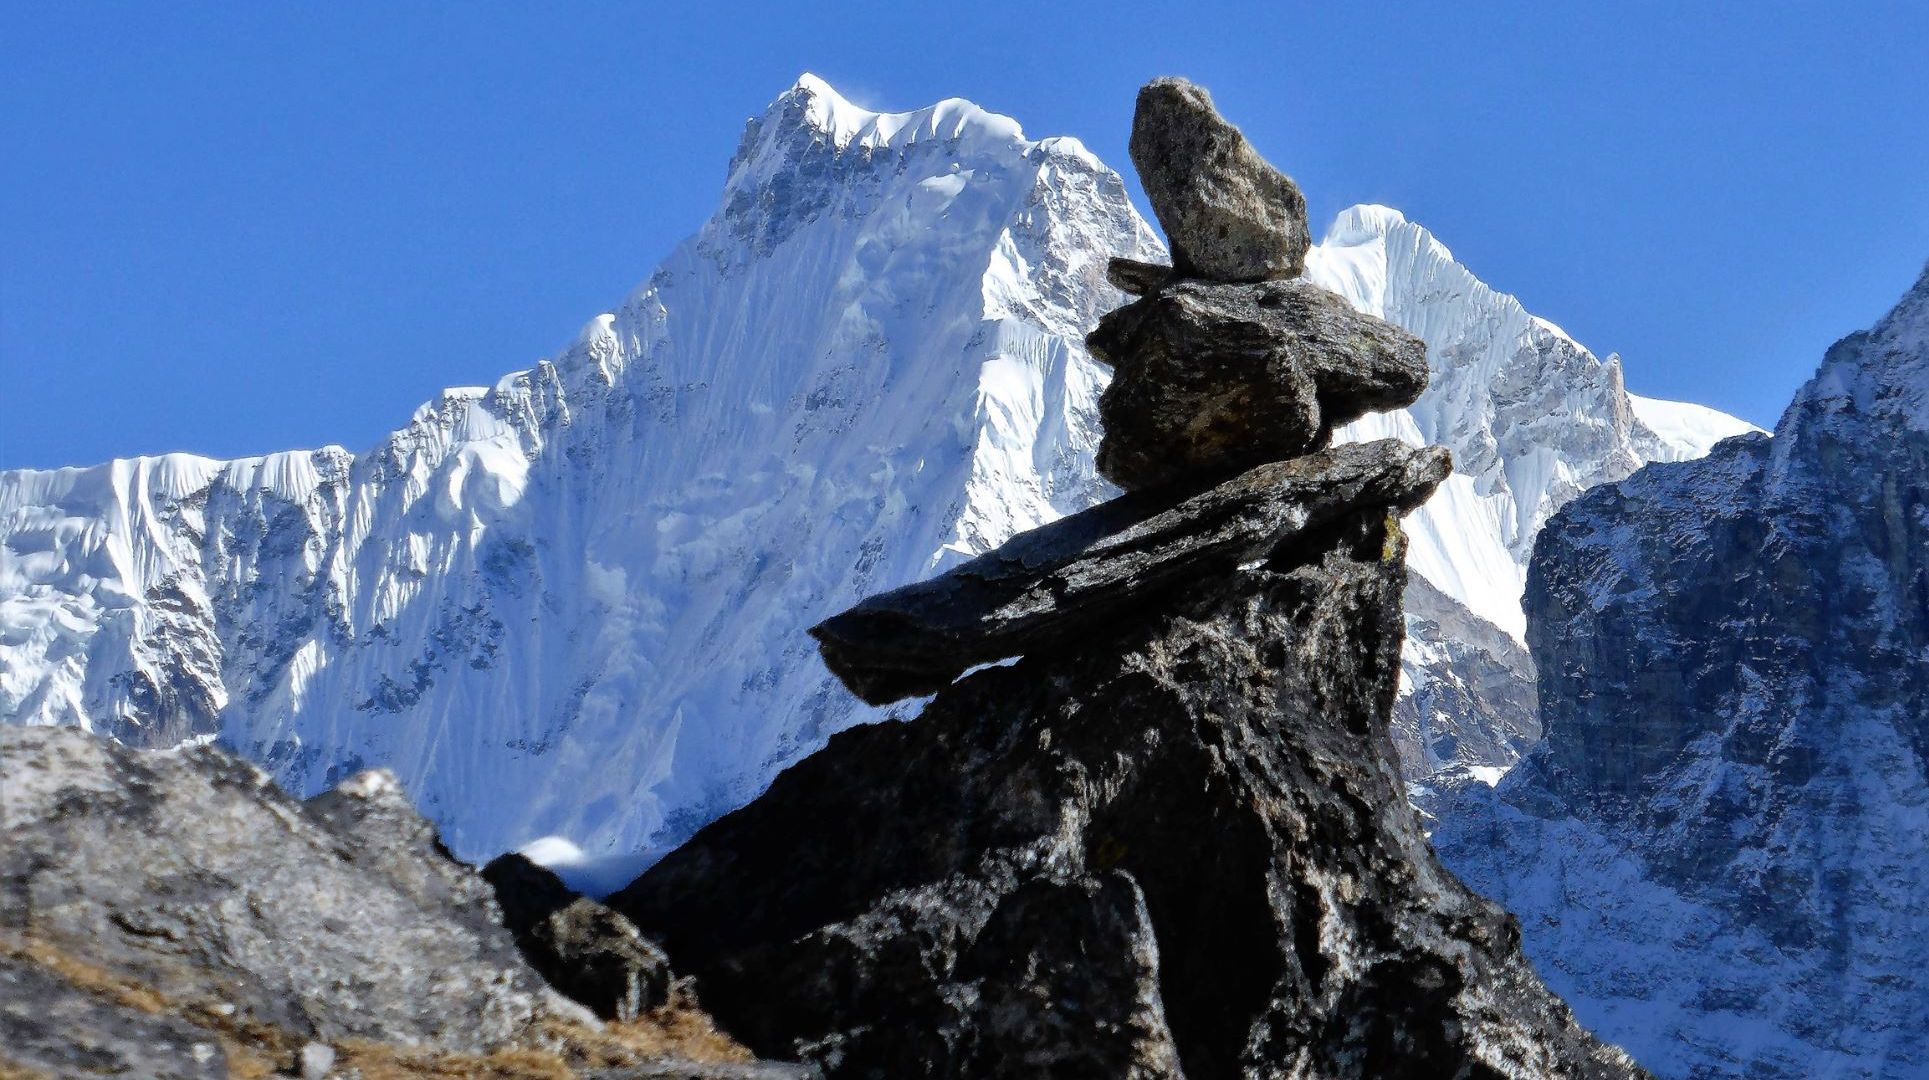 Mt.Chumbu in Everest Region of the Nepal Himalaya